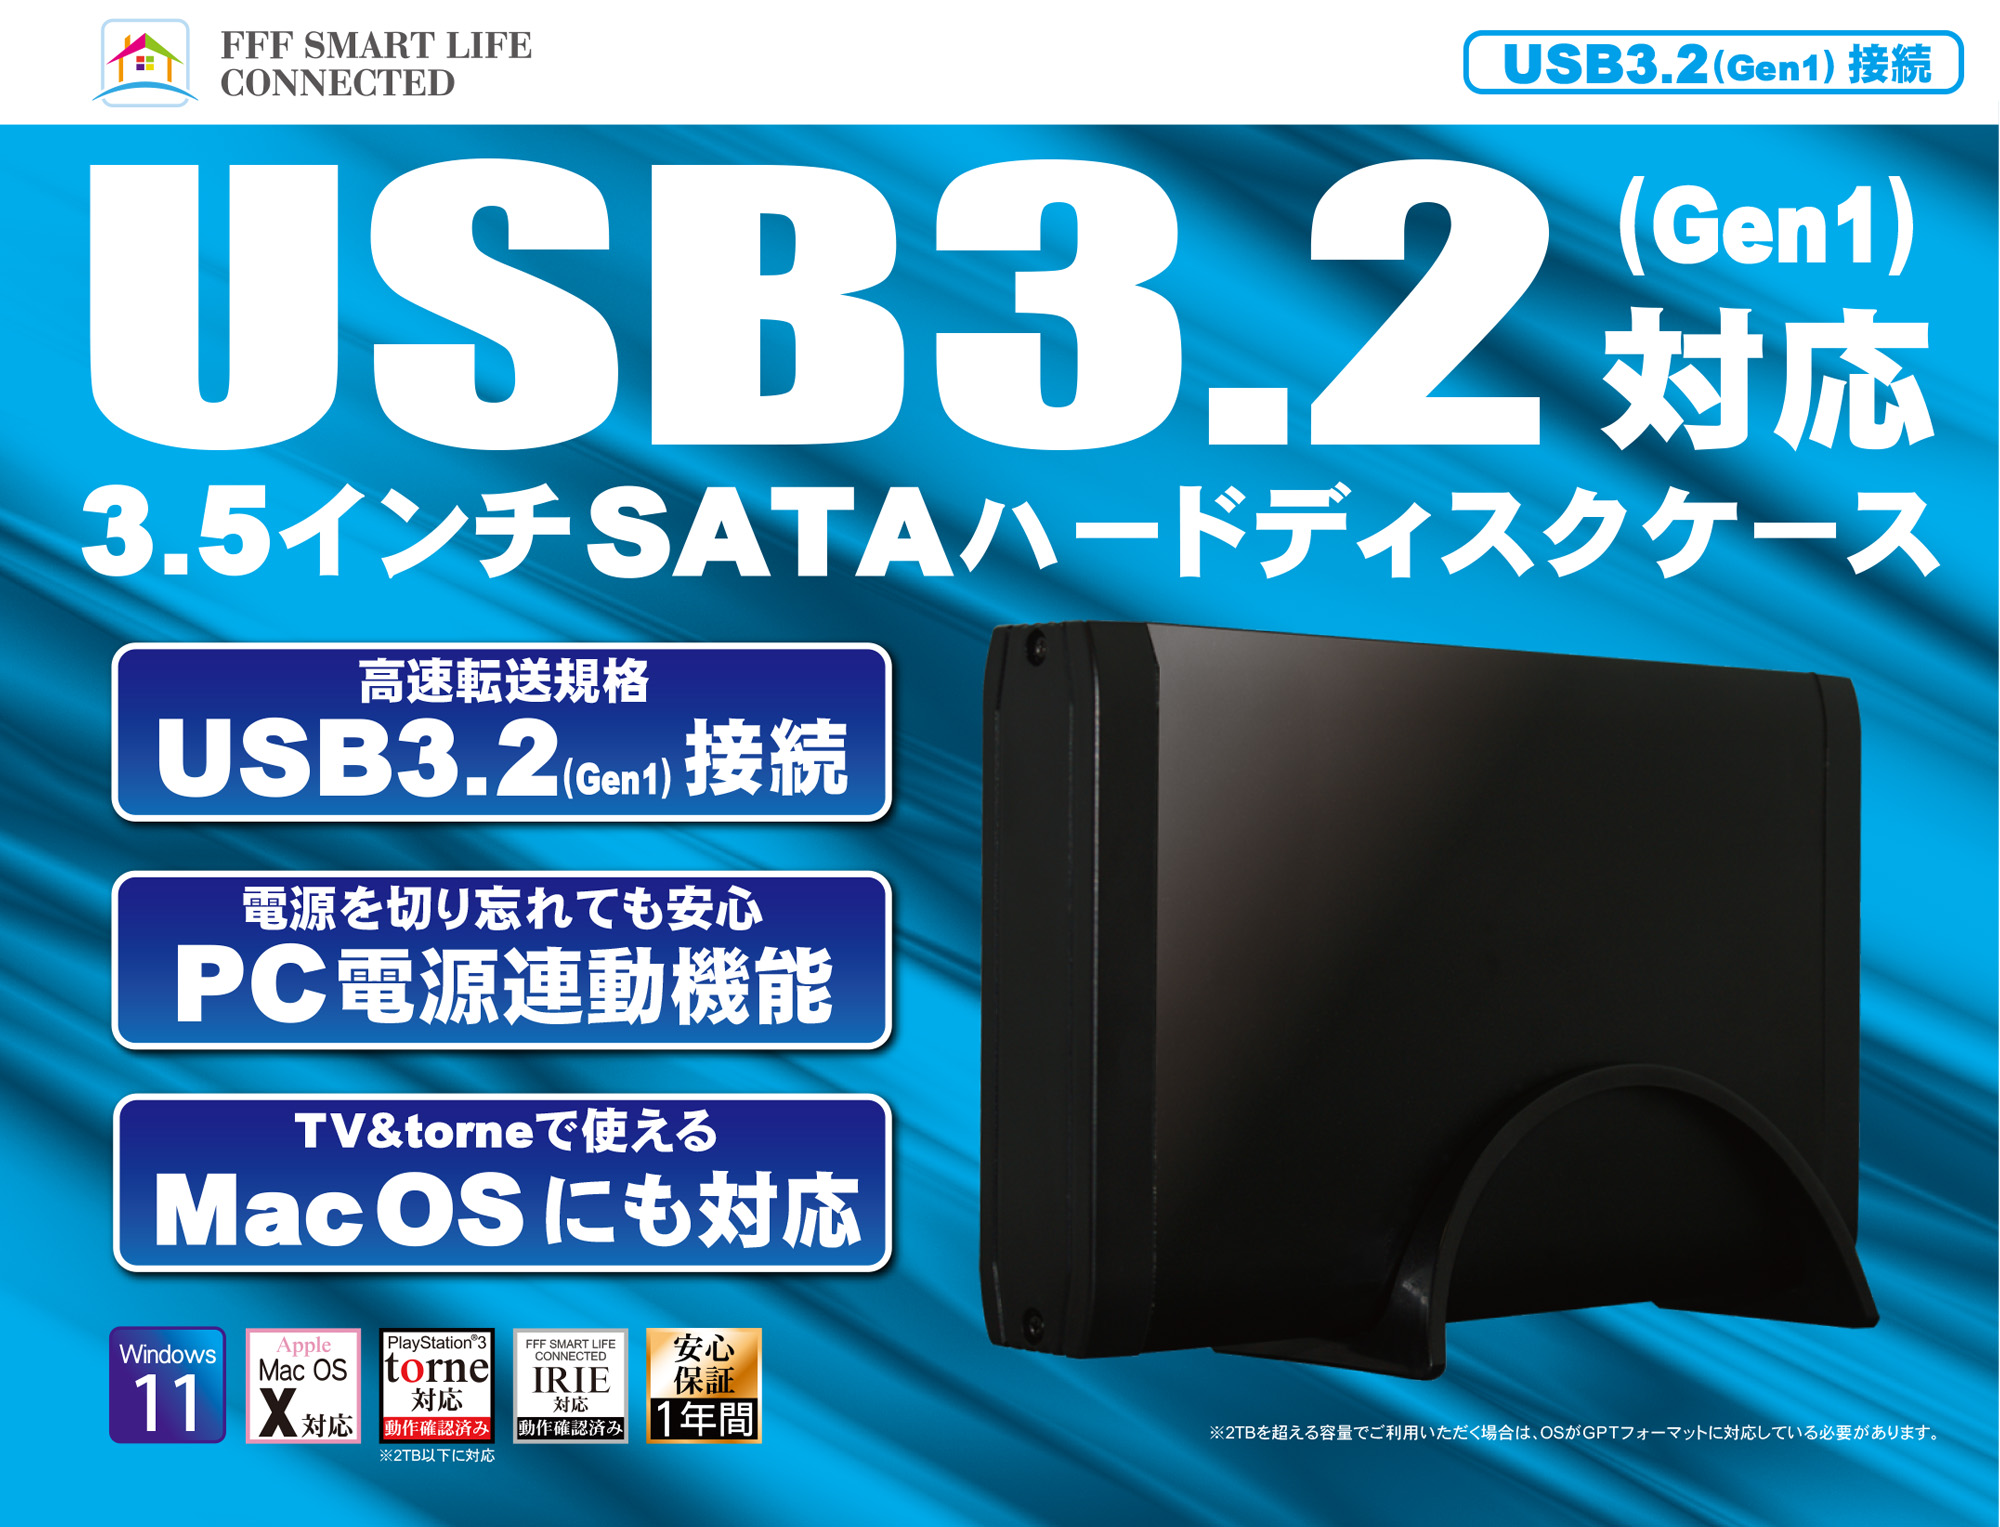 USB3.2(Gen1)対応 3.5インチSATAハードディスクケース MAL-5235SBKU3 | FFF SMART LIFE  CONNECTED株式会社